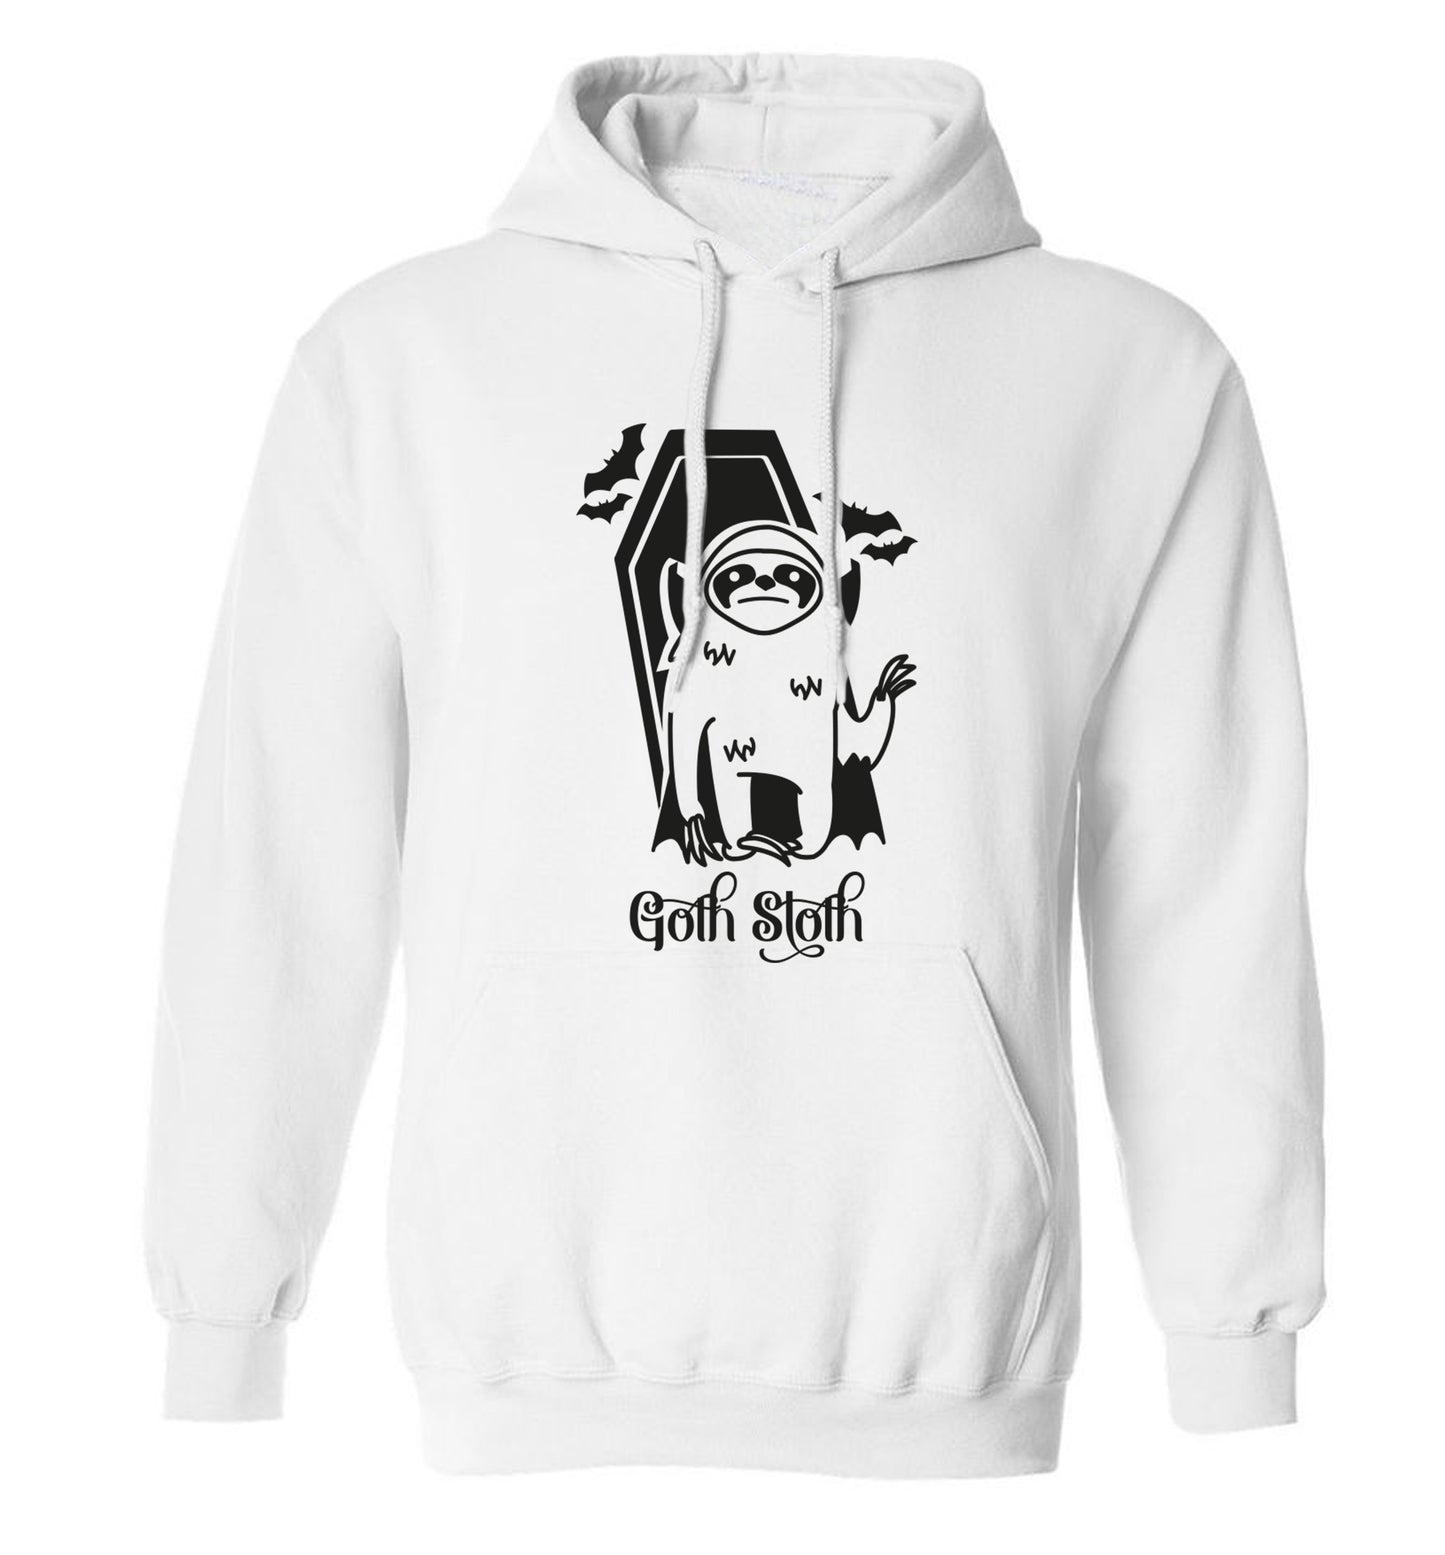 Goth Sloth adults unisex white hoodie 2XL